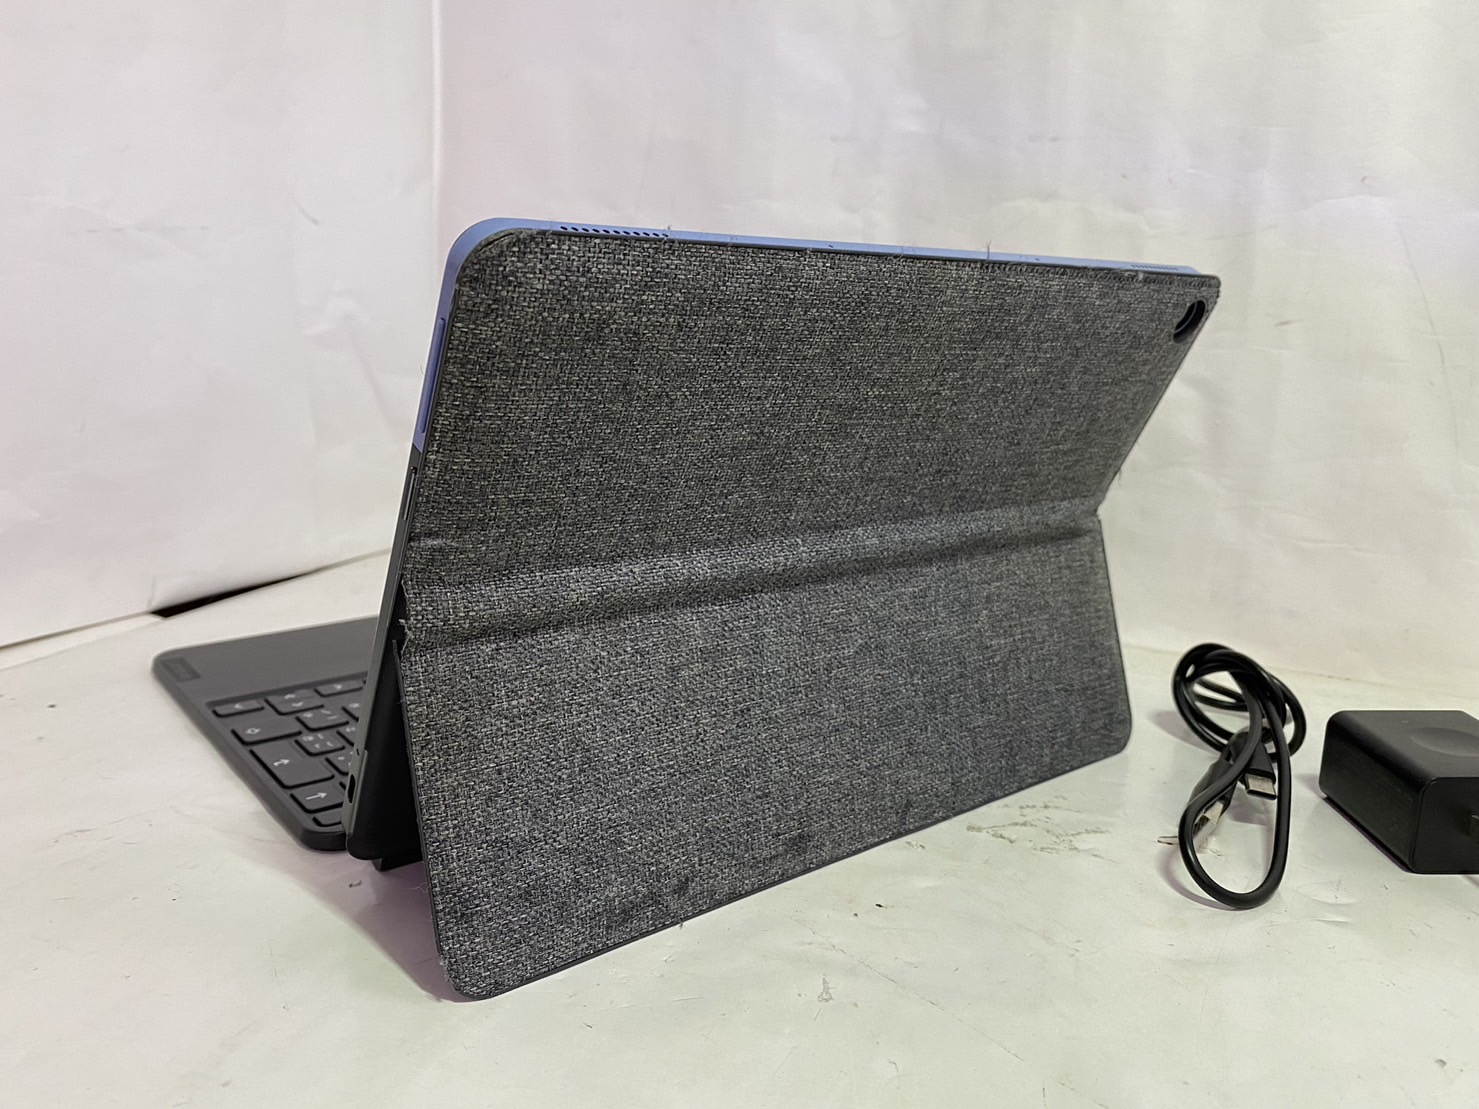 LENOVO(レノボ) IdeaPad Duet Chromebook ZA6F0038JPの激安通販(詳細情報) - パソコンショップパウ